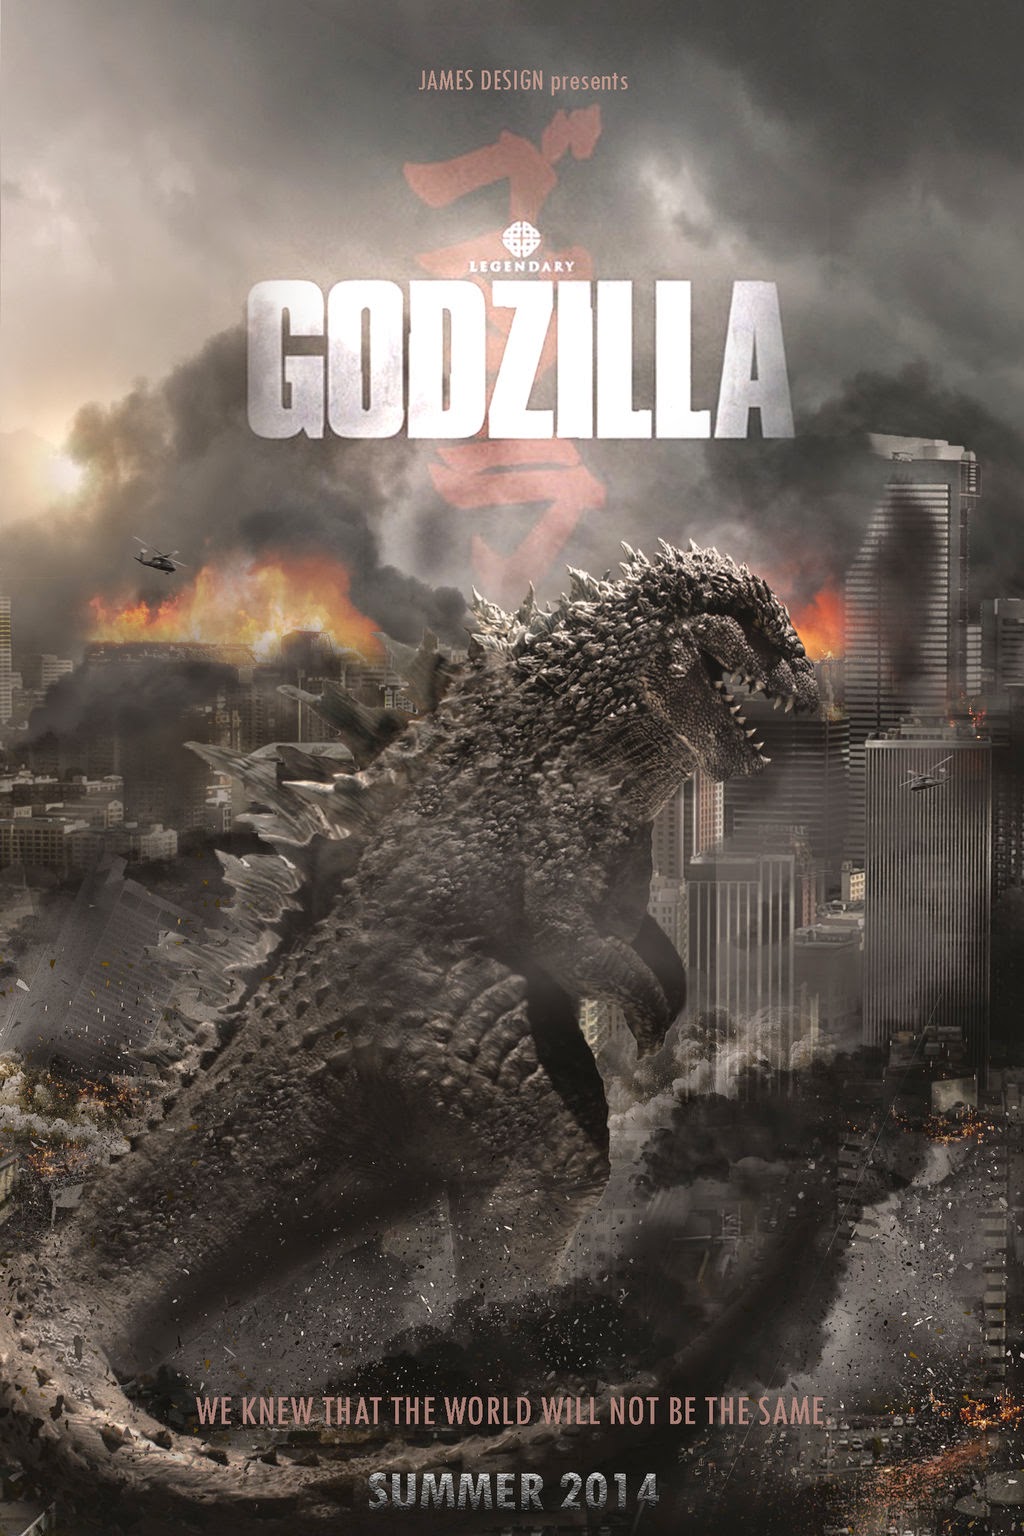 Godzilla 2014 Ver gratis online en vivo streaming sin descarga ni torrent